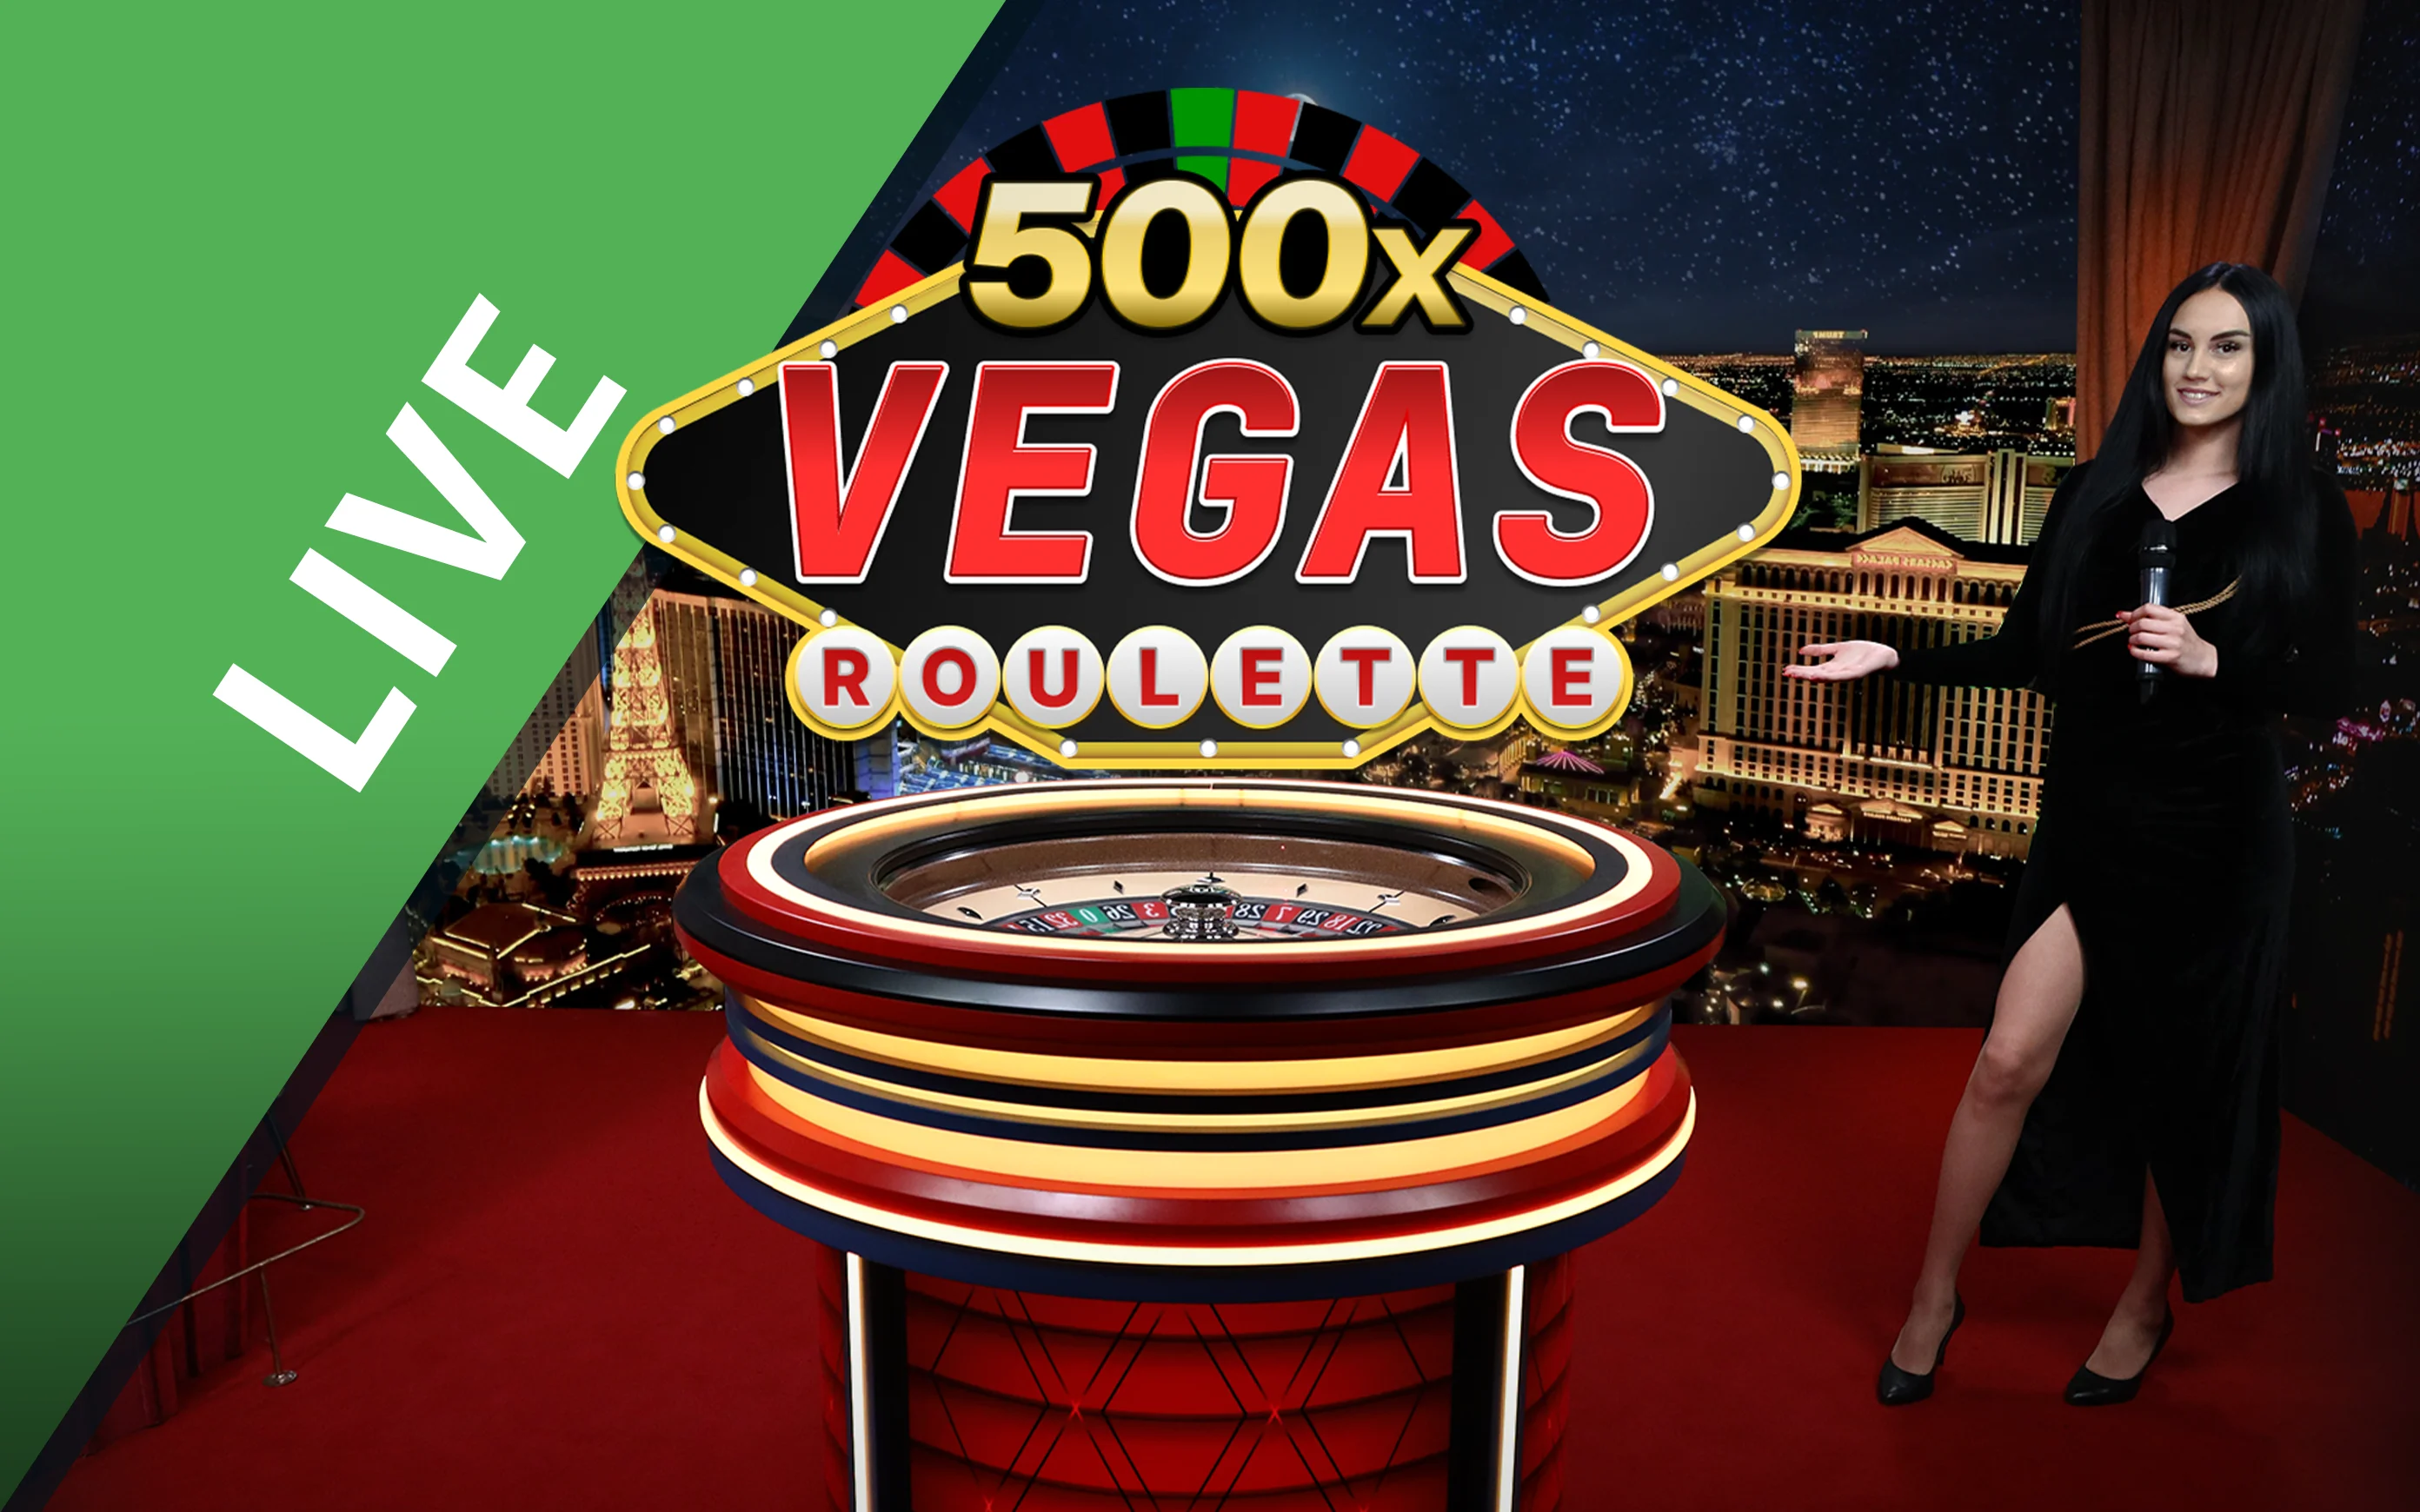 Juega a Vegas Roulette 500x en el casino en línea de Starcasino.be